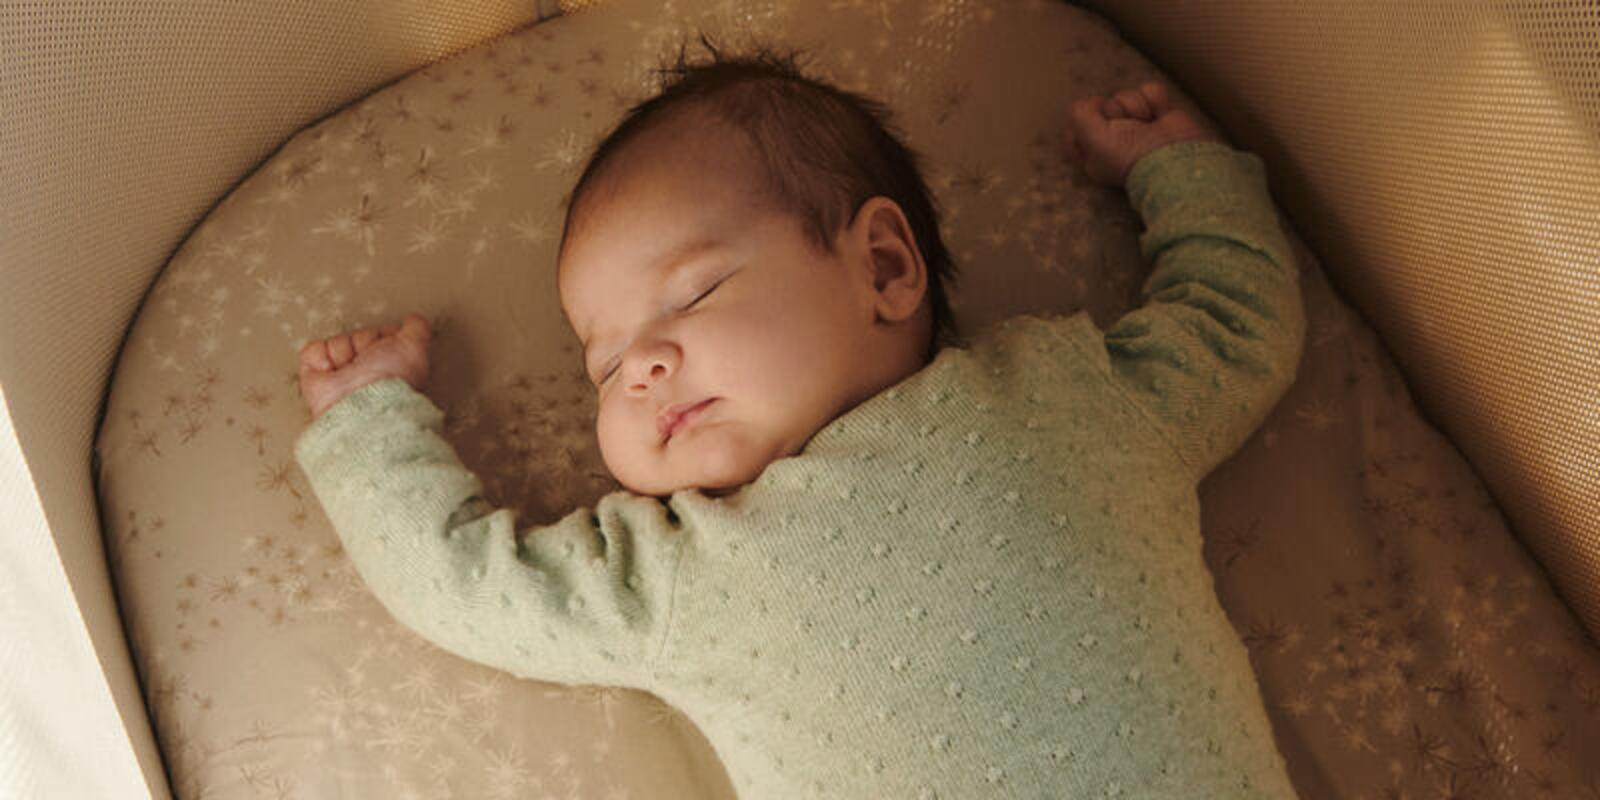 Baby sleeping in snoozi bassinet.